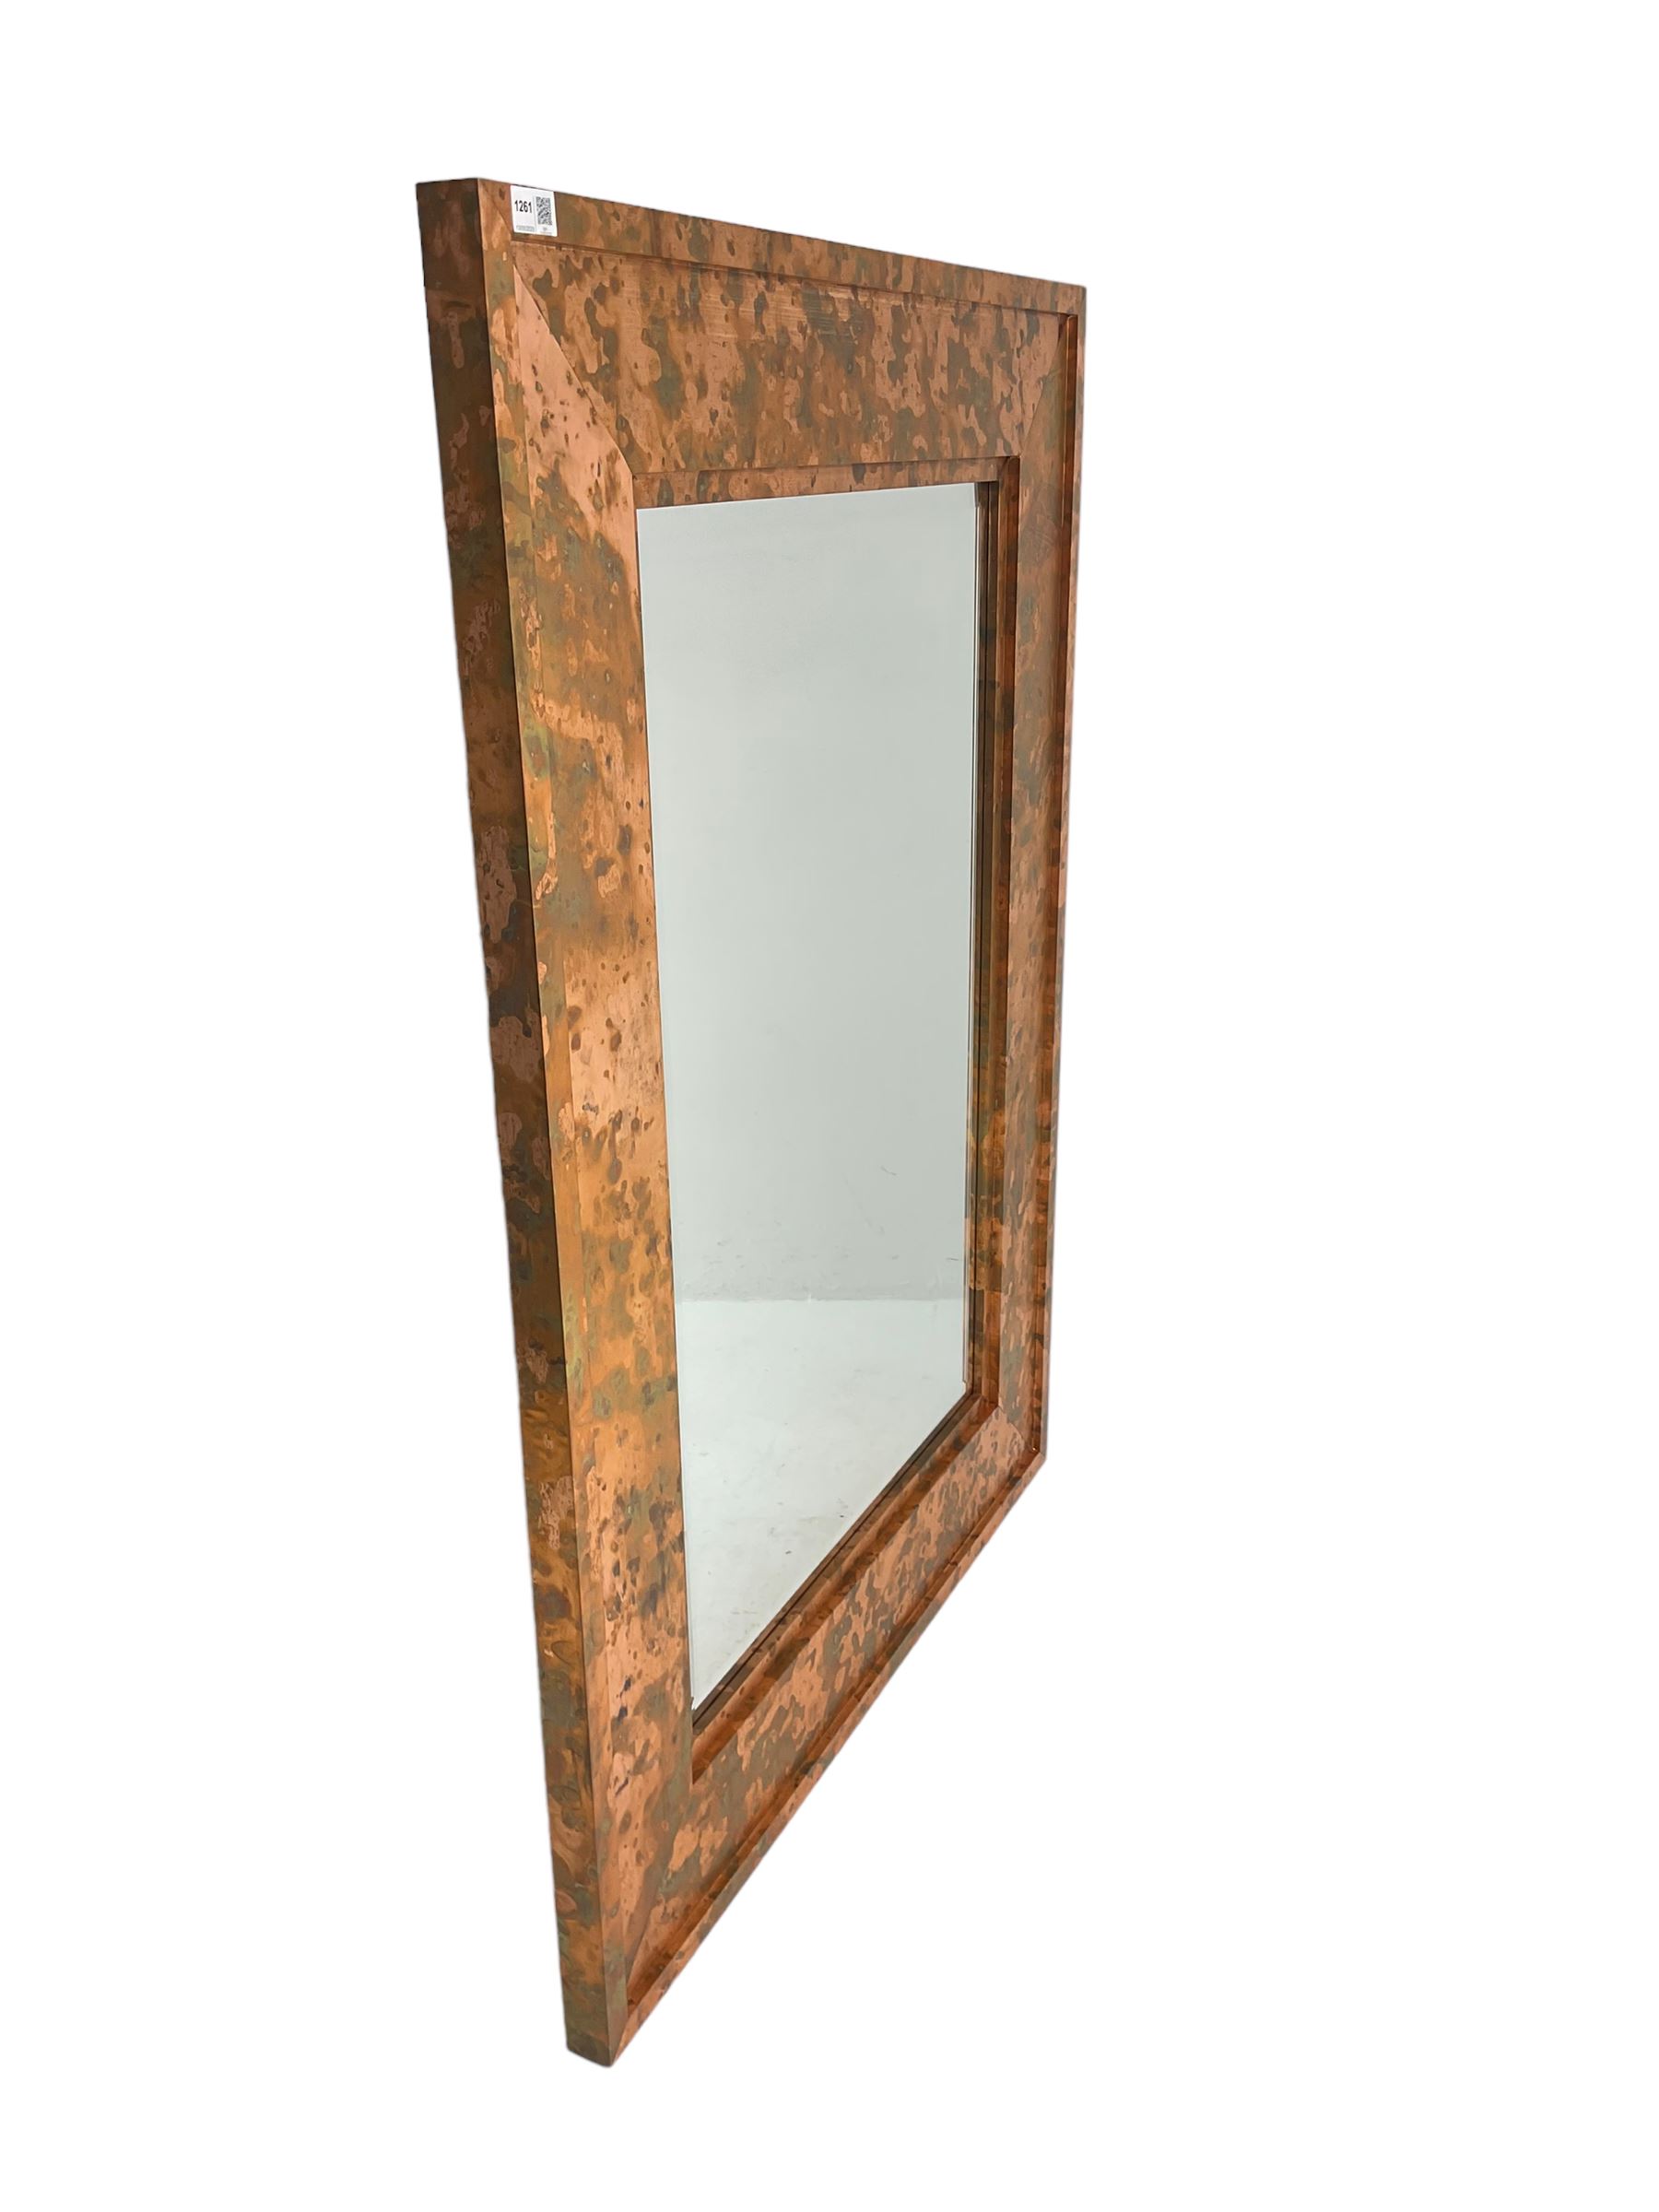 Large copper framed mirror - Image 3 of 5